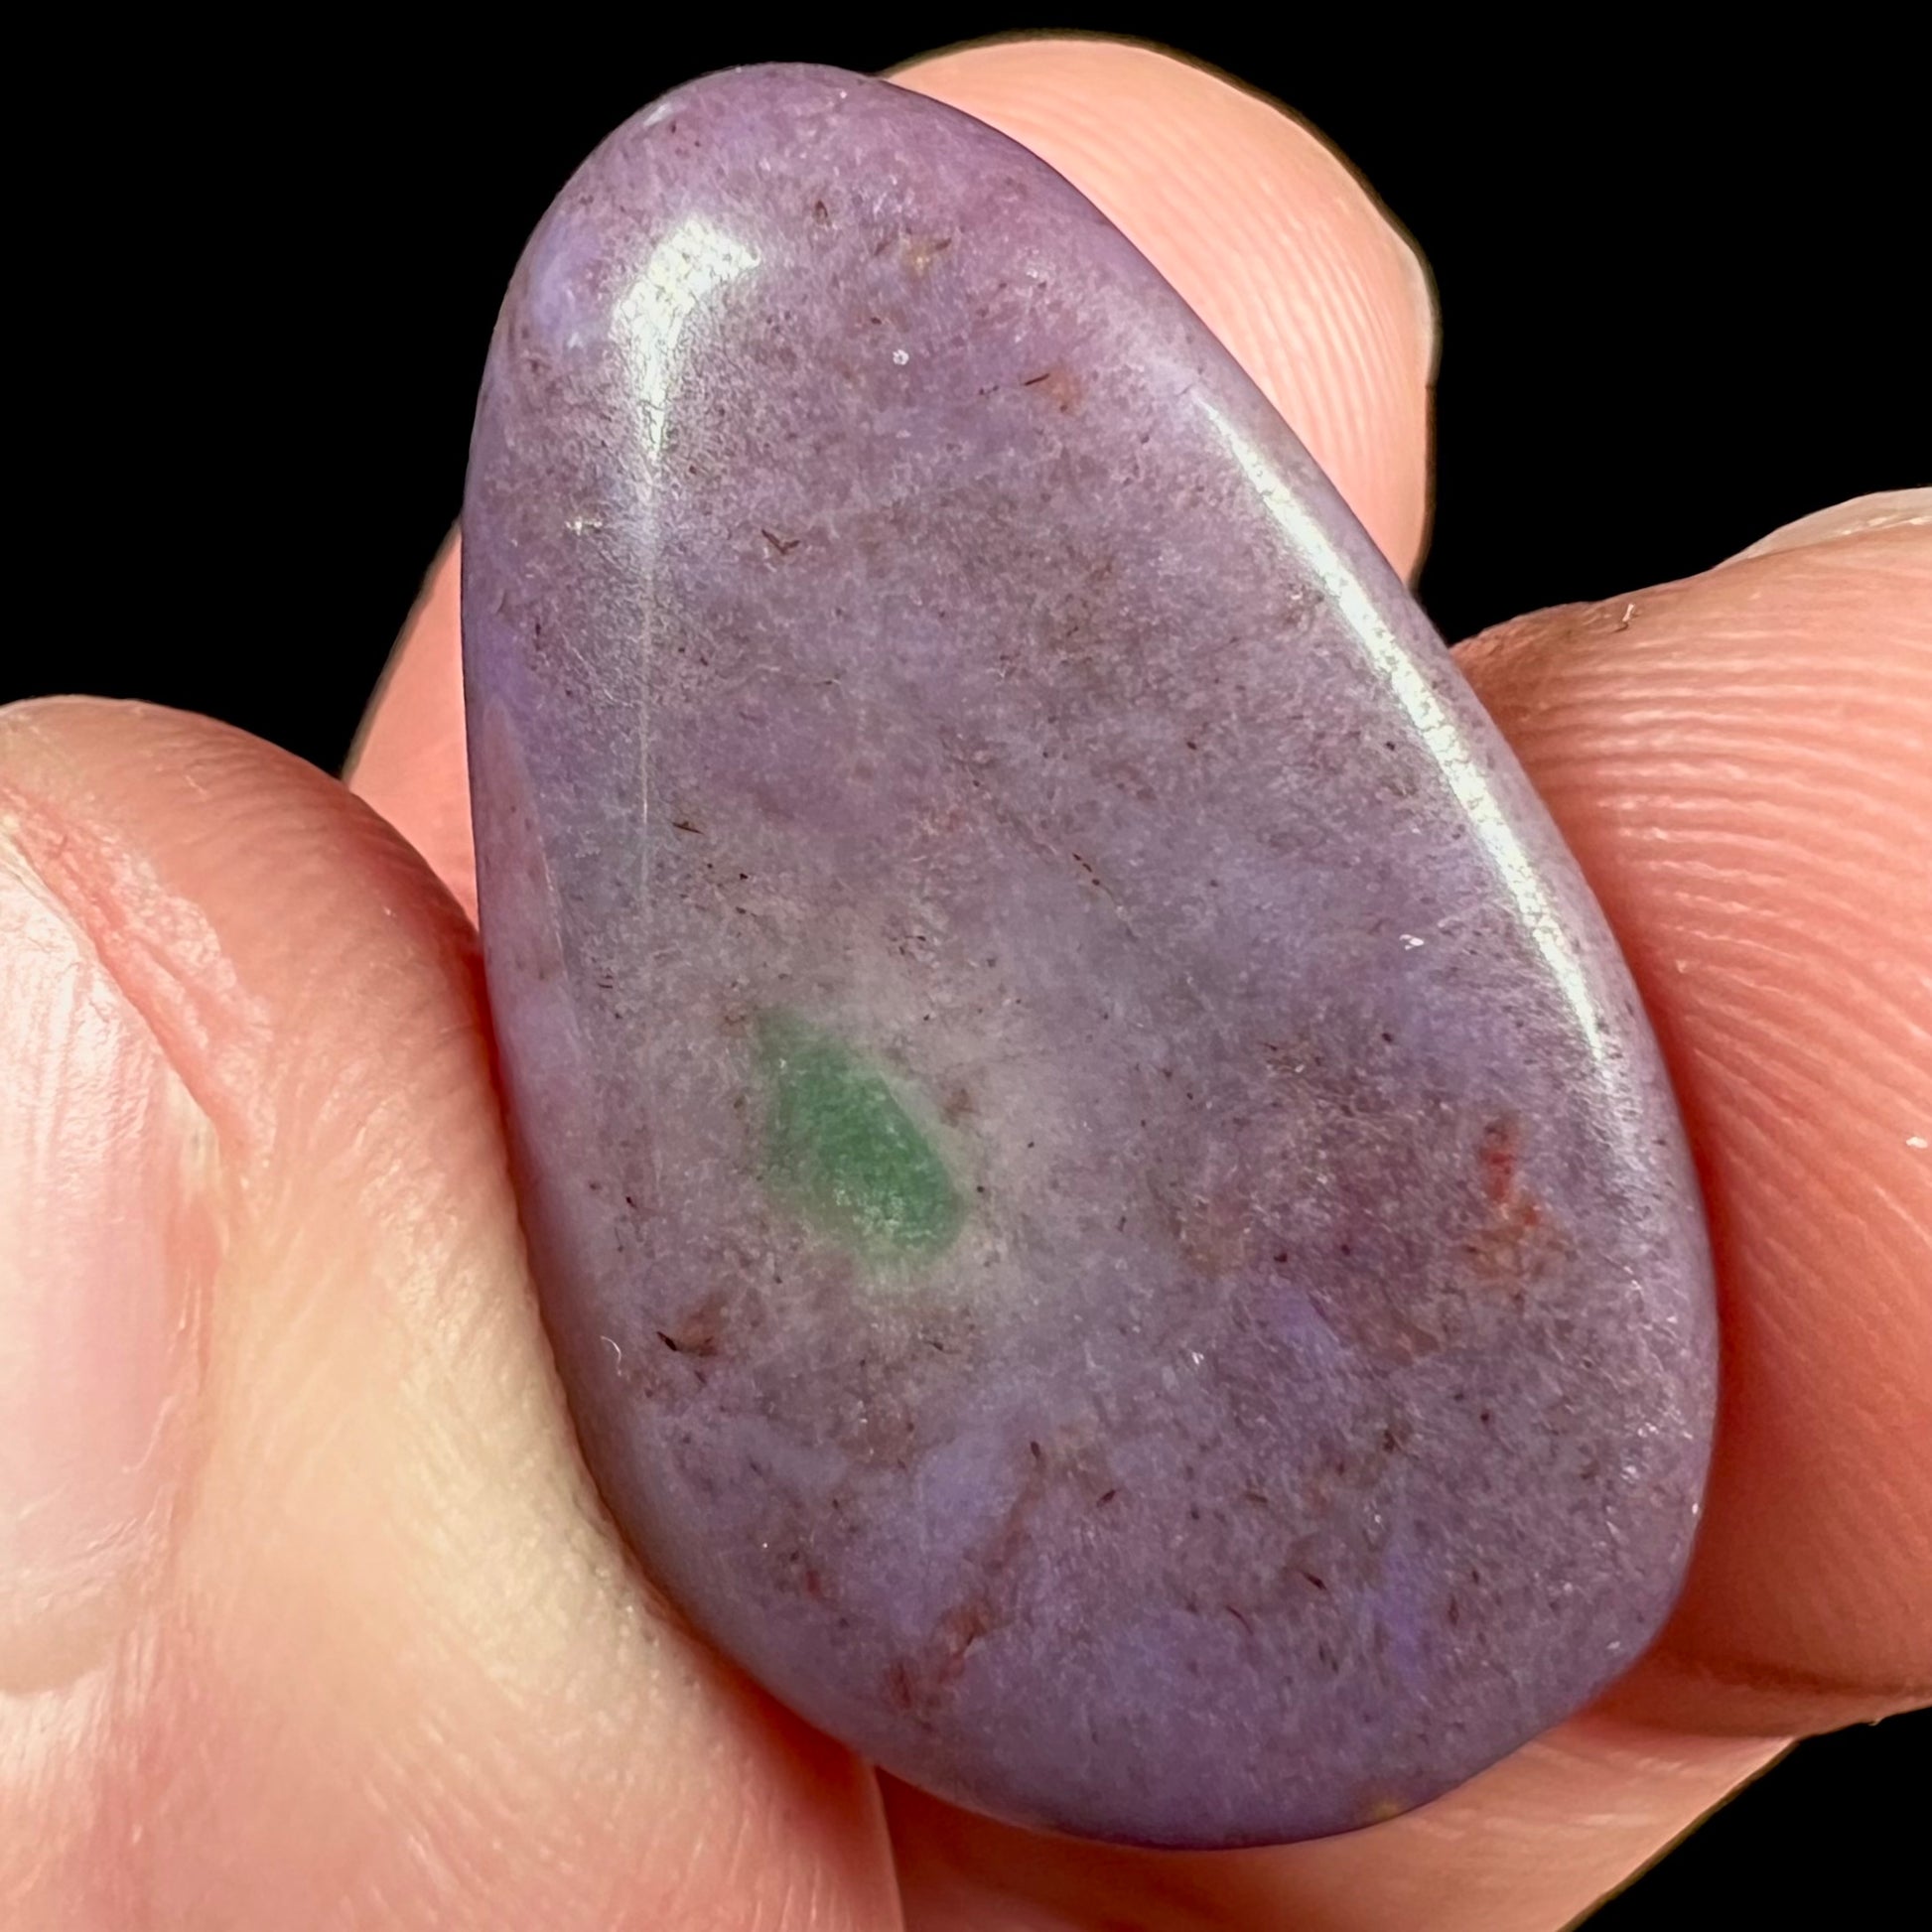 A tumbled purple turkiyenite jade stone from Borsa, Turkey.  The stone has a green jadeite inclusion.